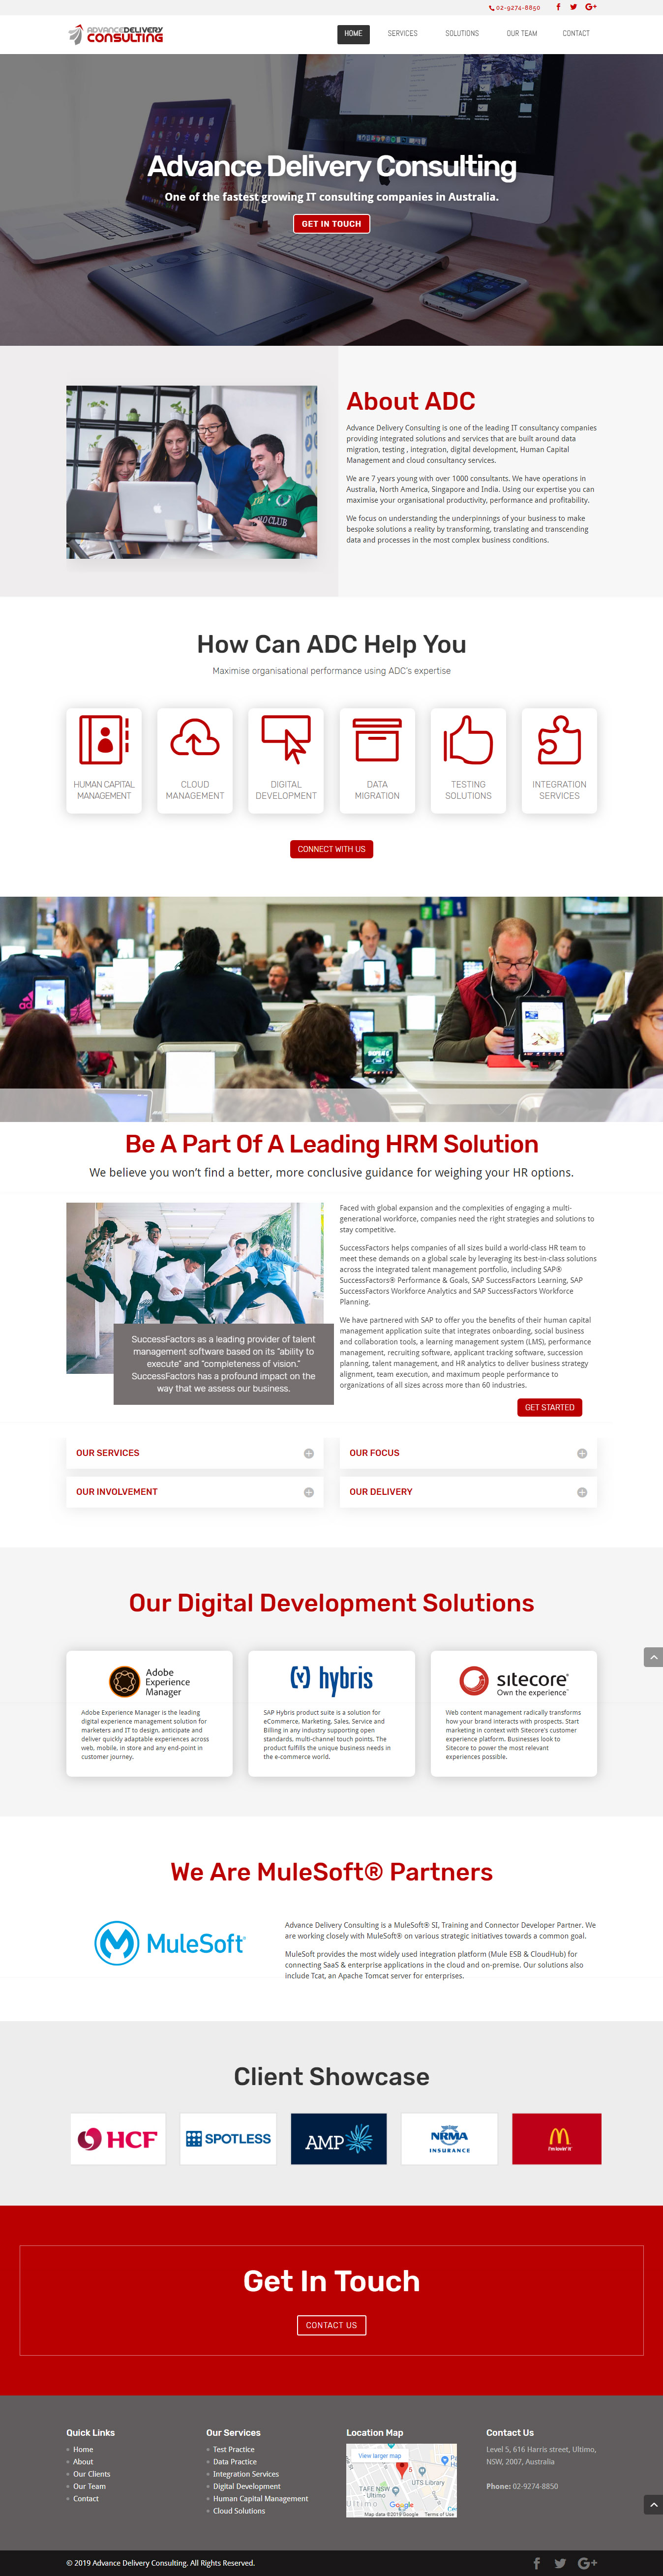 Responsive CMS Website Design for an Australian company